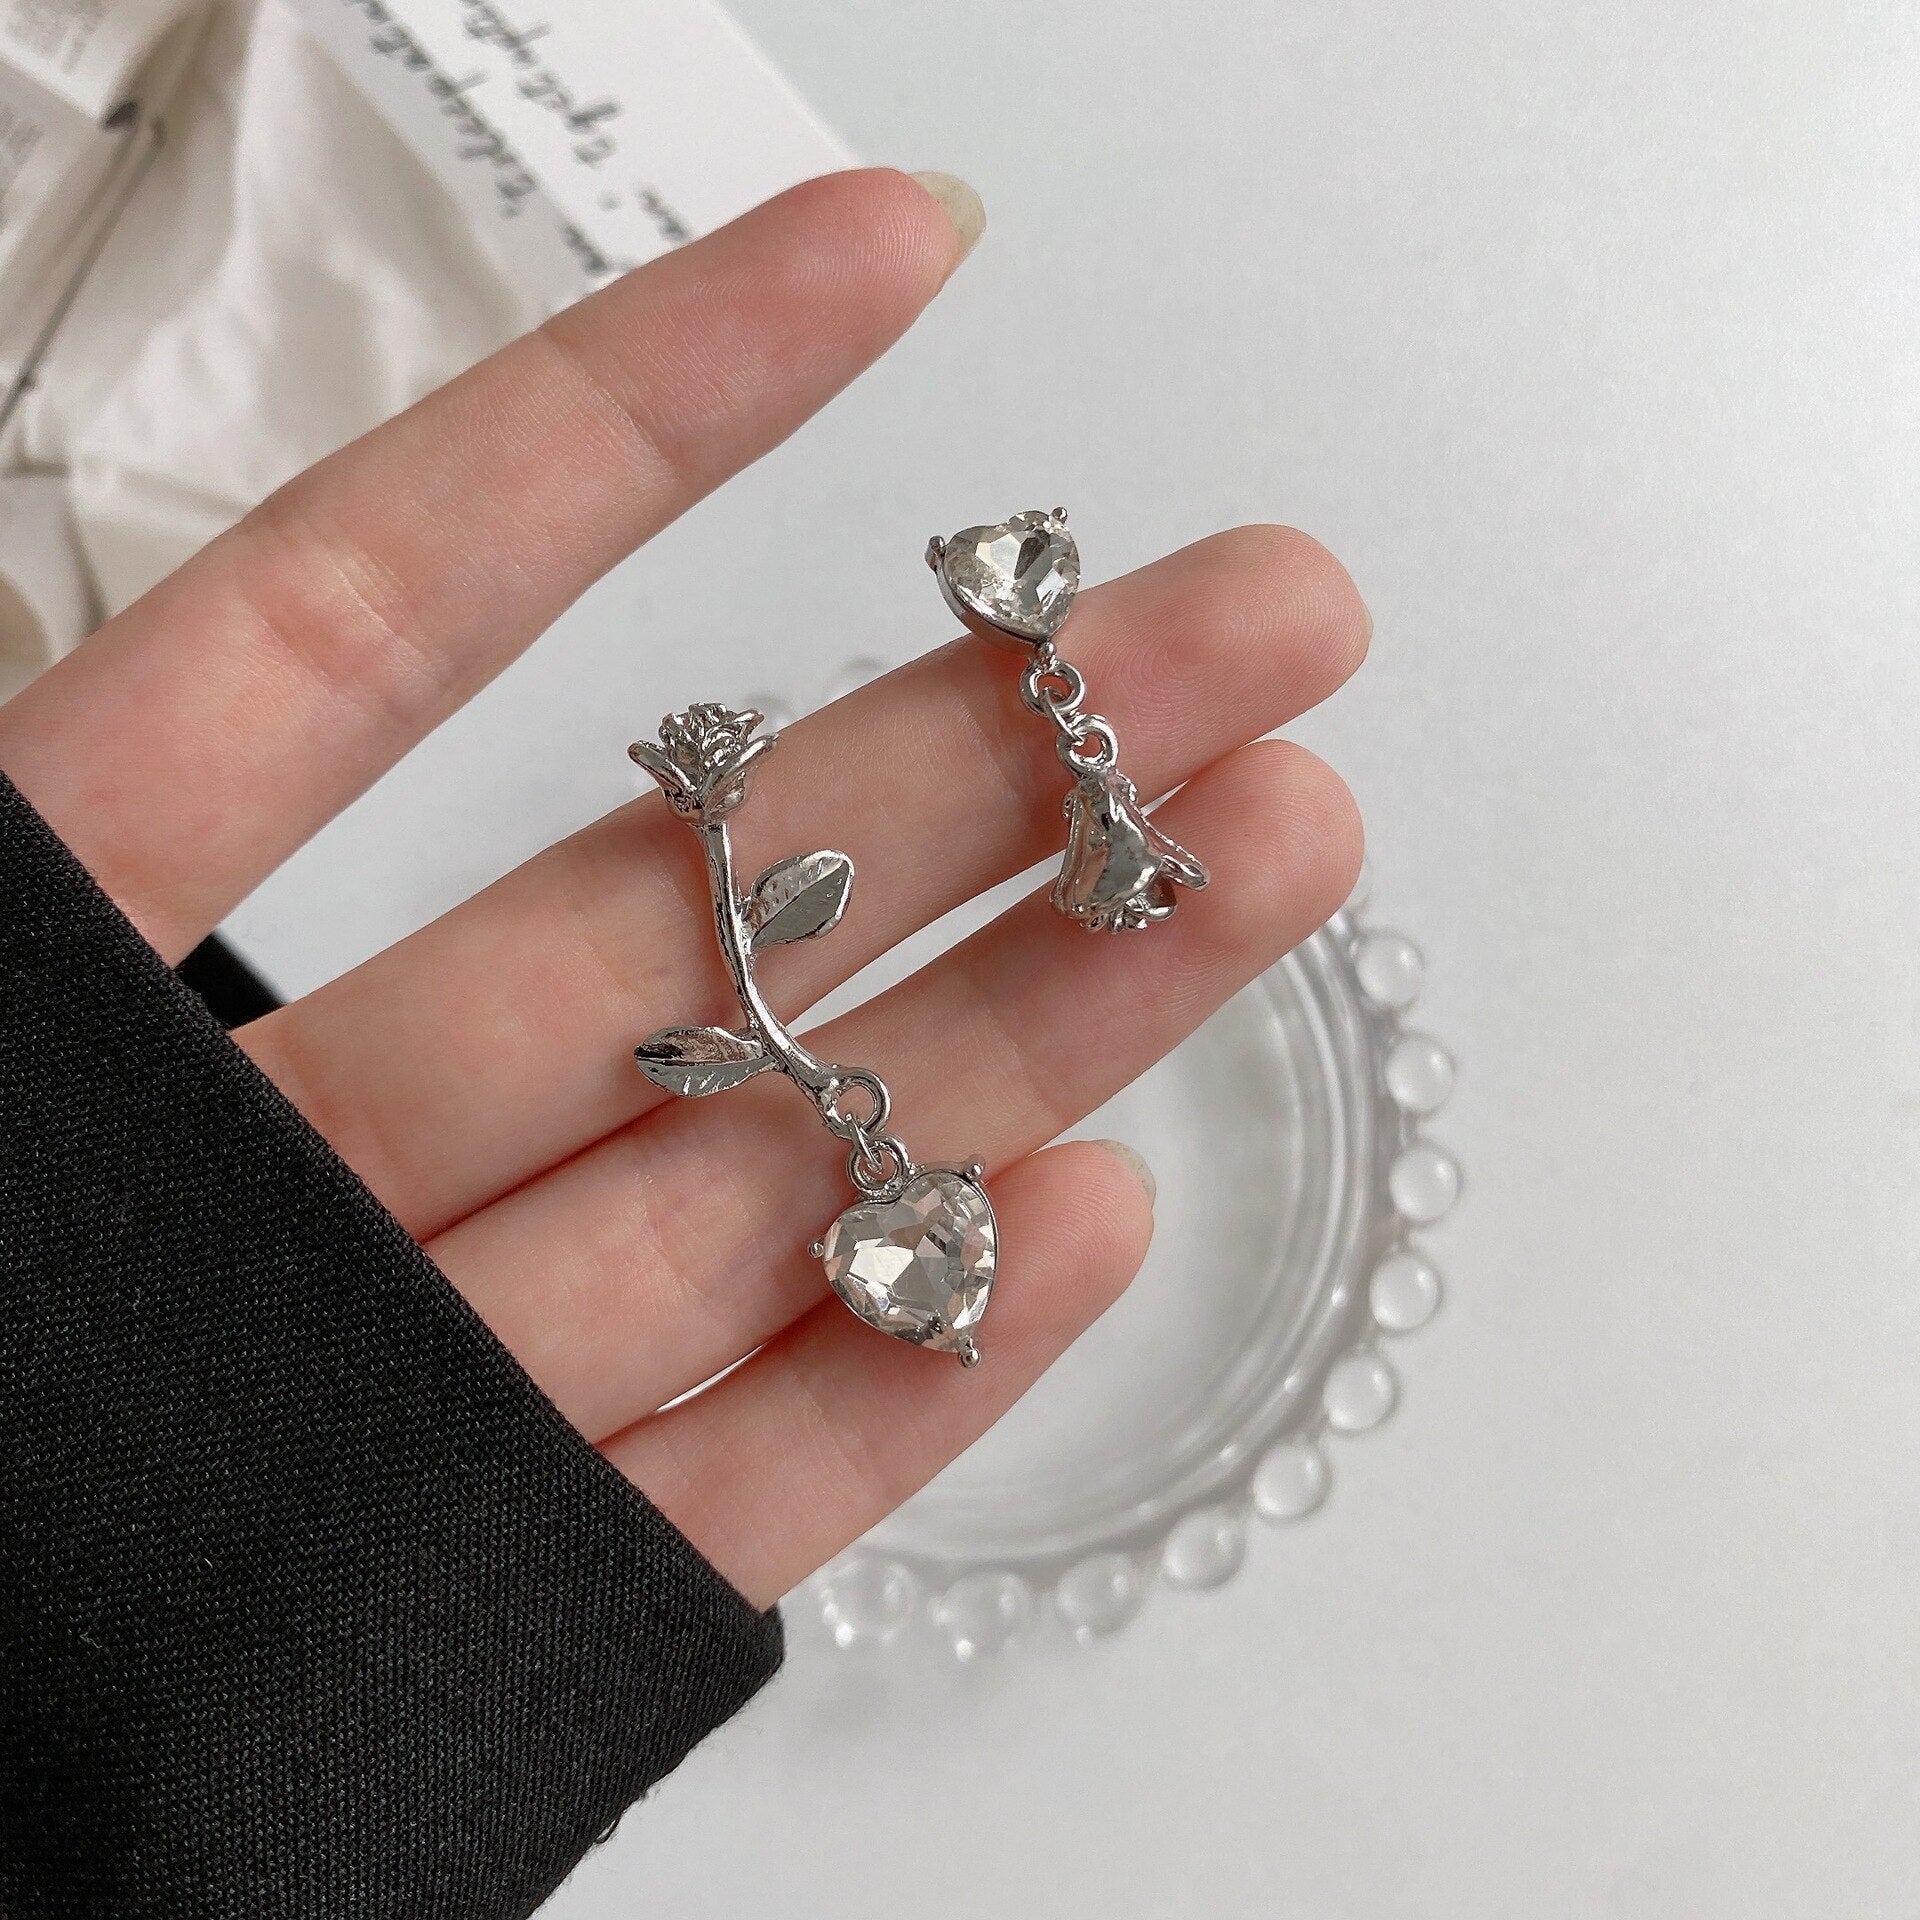 Han Feng Rose Asymmetric Earrings Vintage Flower Earrings Commemorative Day Party Jewelry Gift Accessories